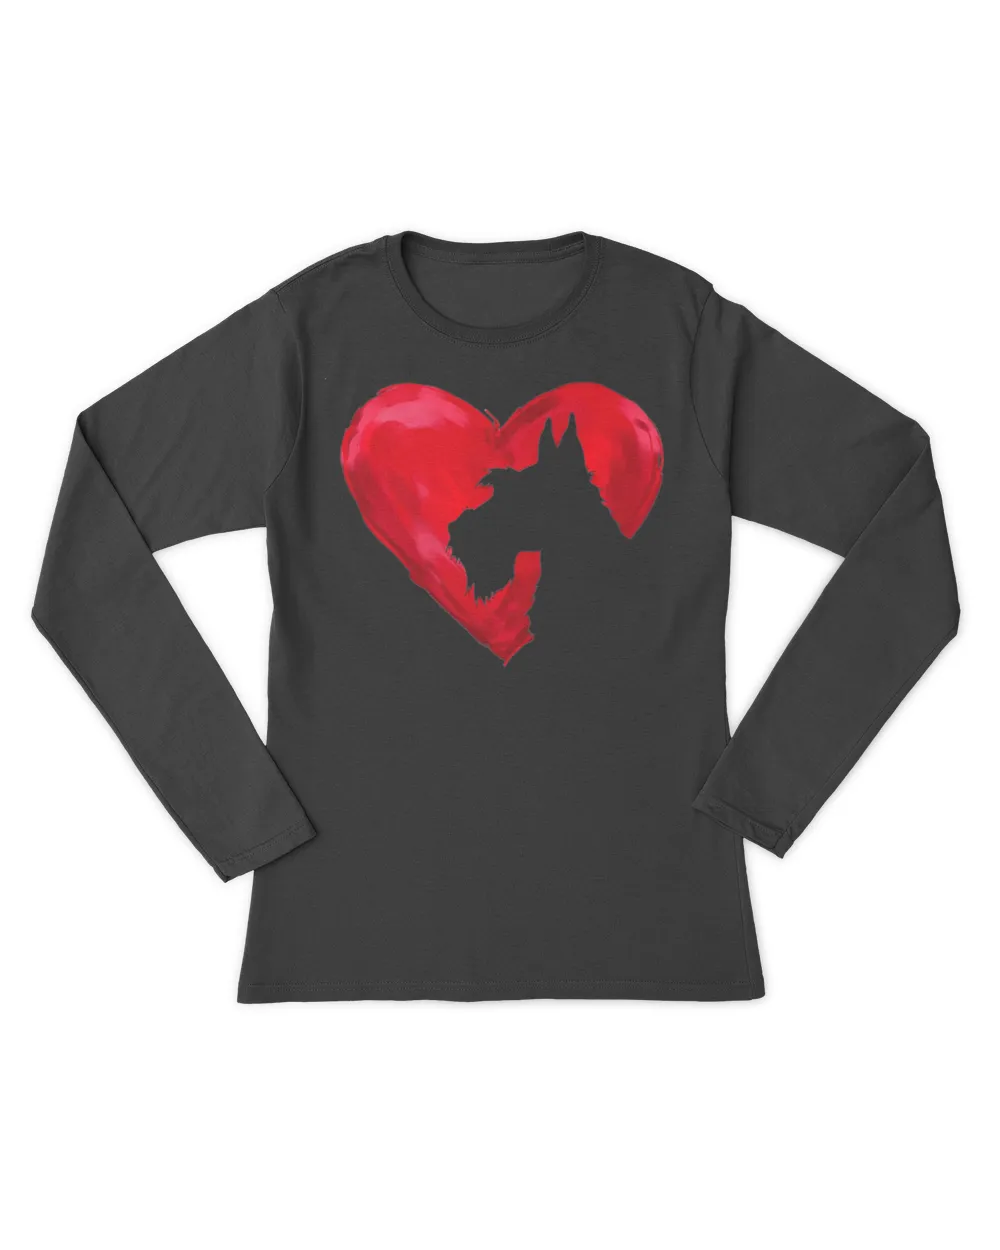 Schnauzer Heart silhouette Valentine's Day Dog Lover Gift T-Shirt